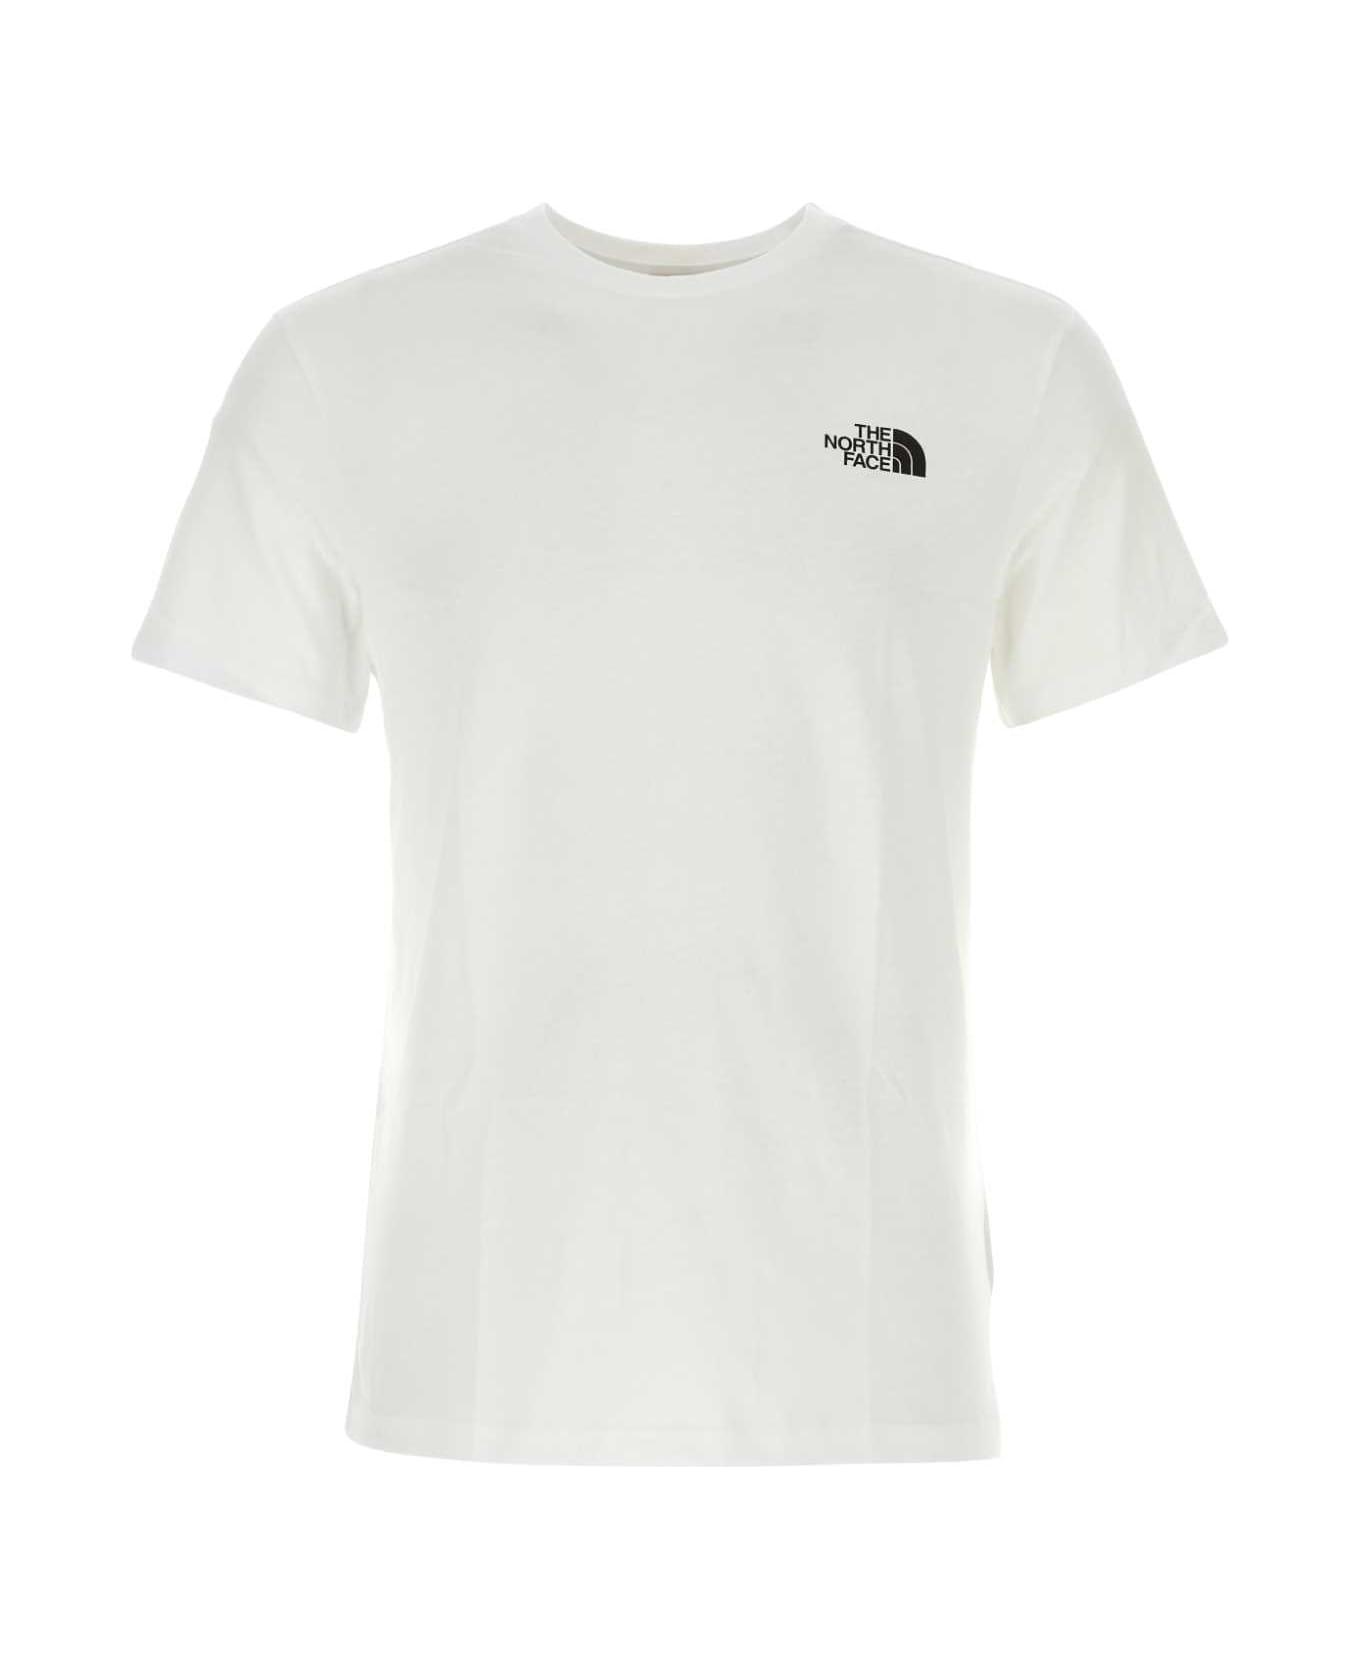 The North Face White Cotton T-shirt - TNF WHITE